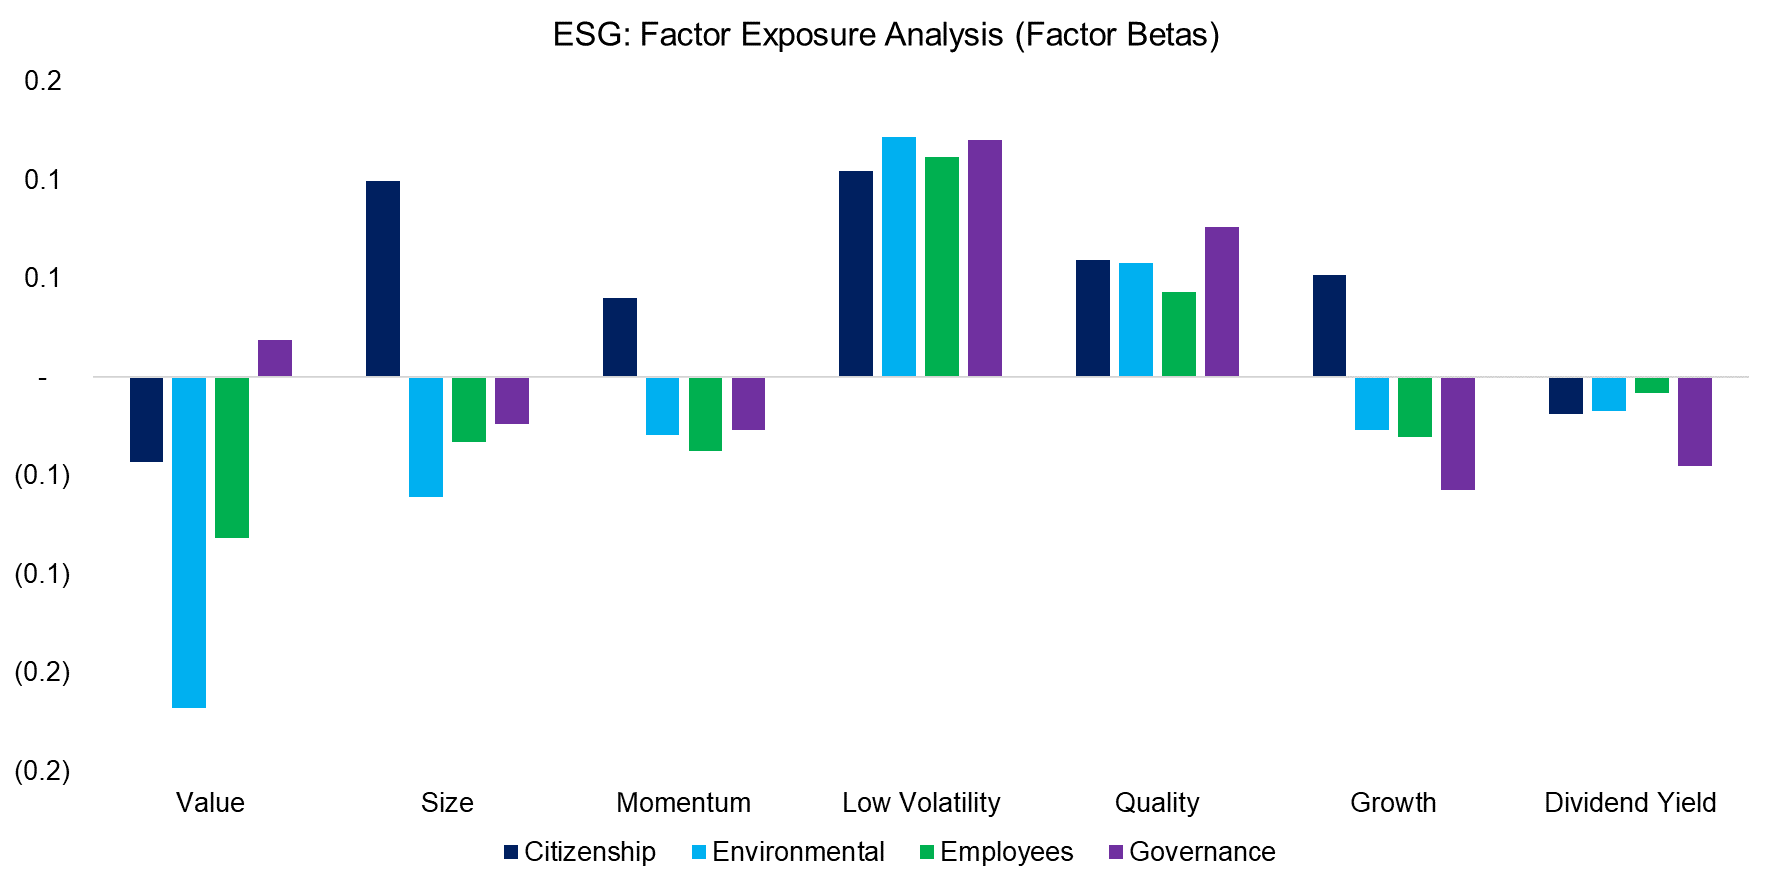 ESG Factor Exposure Analysis (Factor Betas)